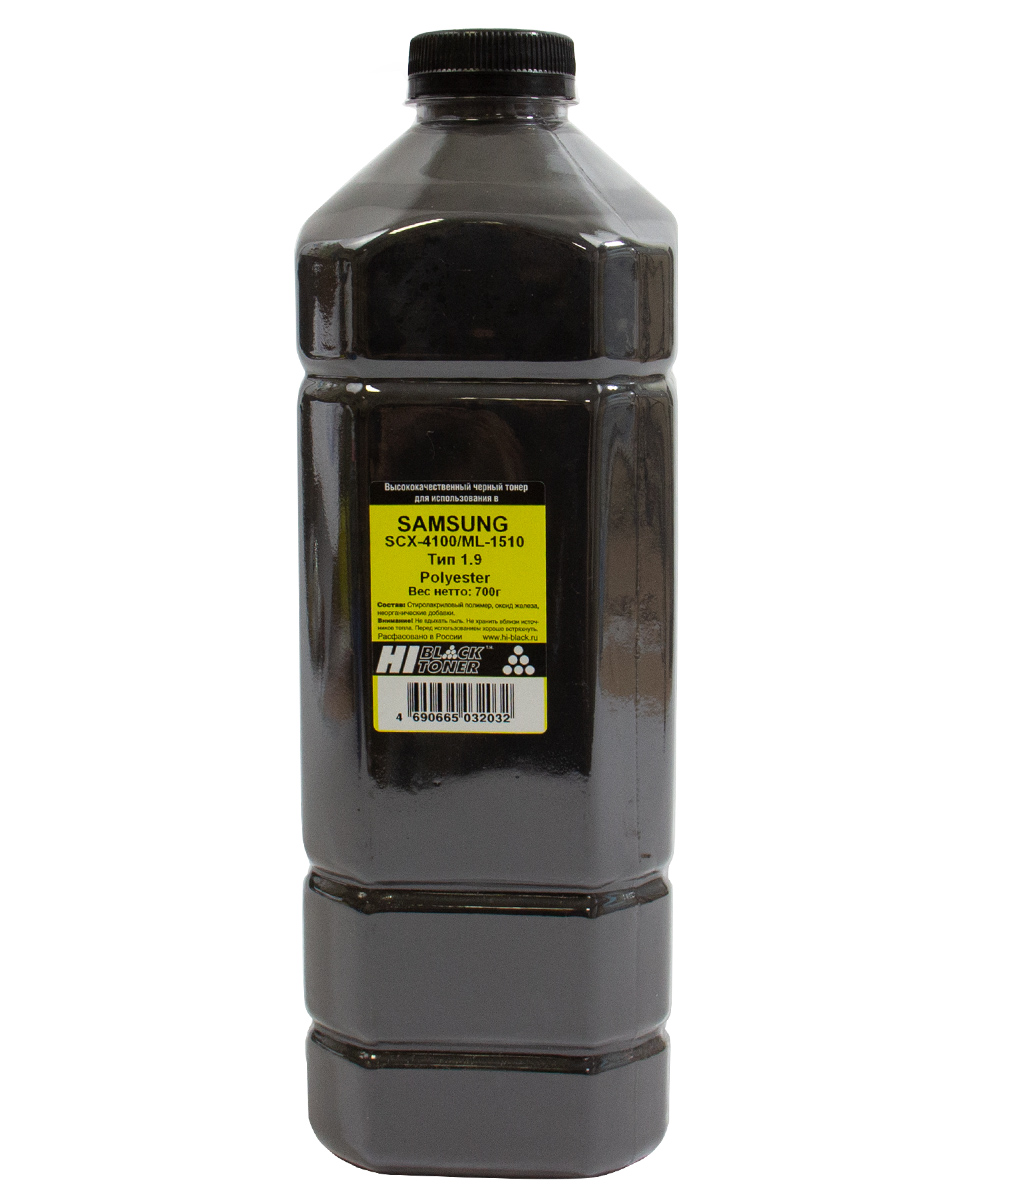 Тонер Hi-Black для Samsung SCX-4100/ ML-1510, Polyester, Тип 1.9, черный, 700 г.